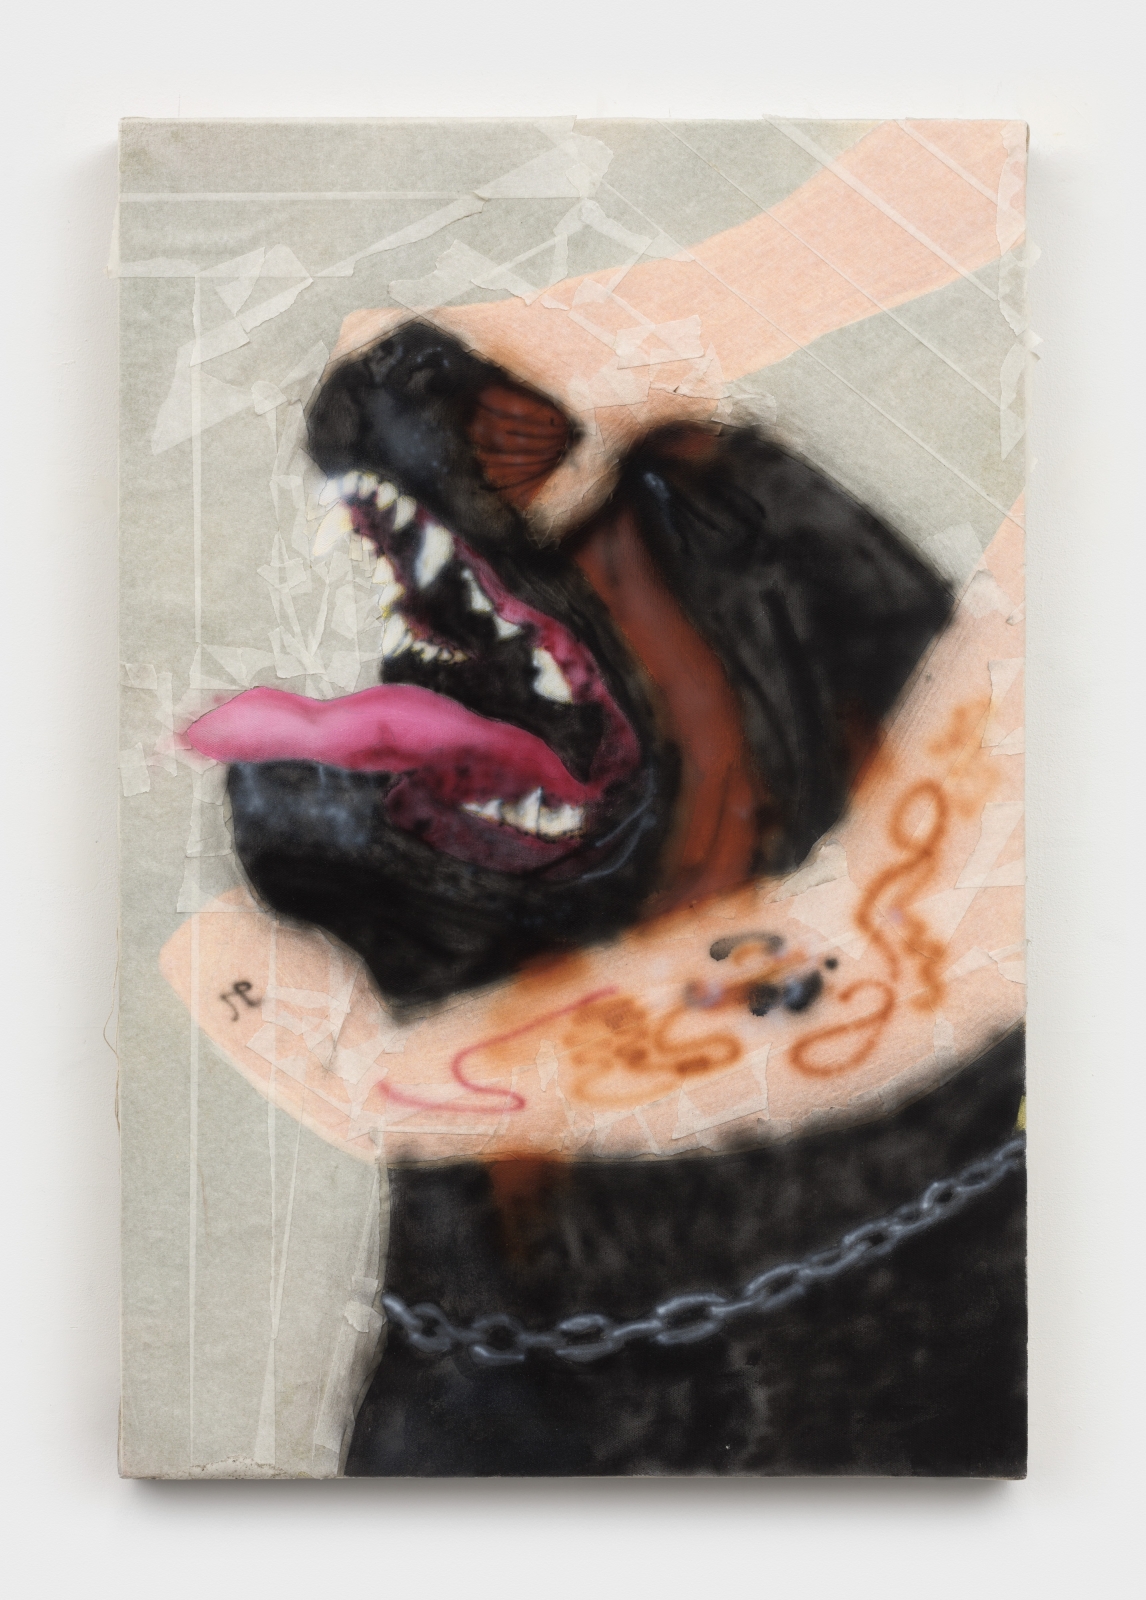 Corey Durbin
Stranglehold, 2022
acrylic, charcoal, pencil, masking tape on canvas
30 x 20 ins.
76.2 x 50.8 cm